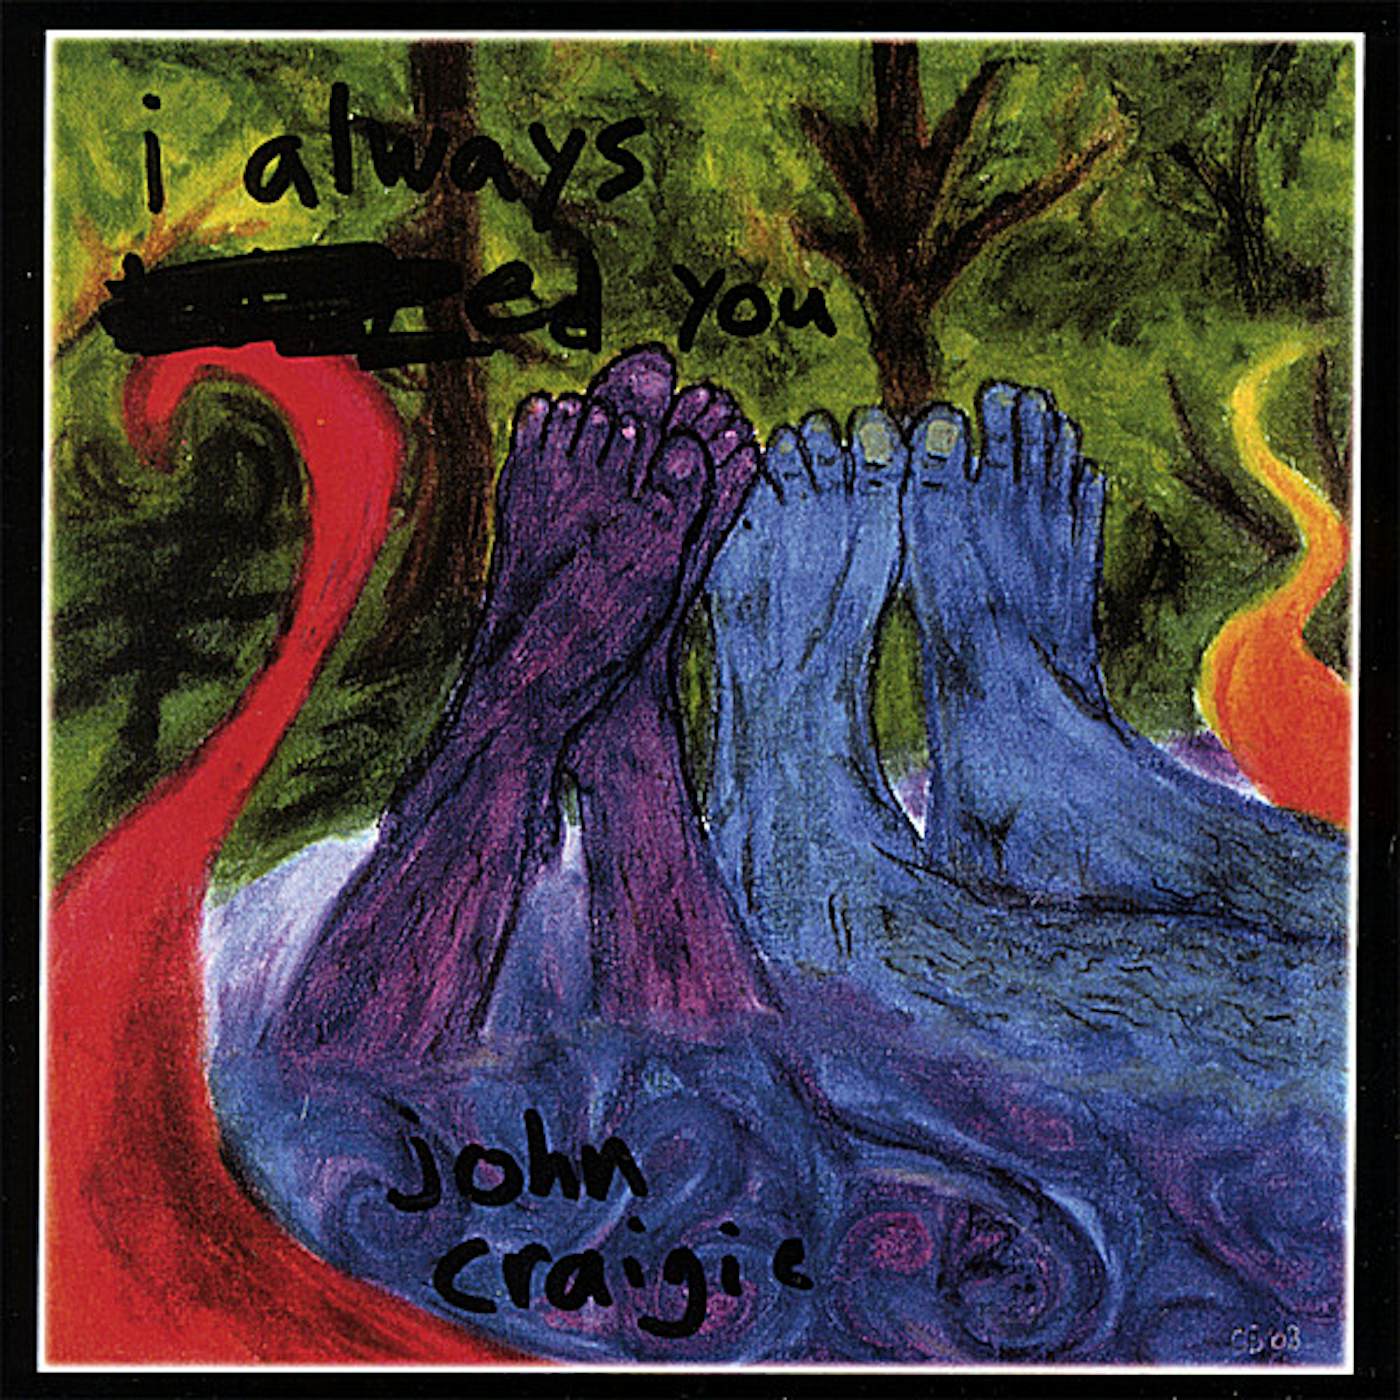 John Craigie I ALWAYS -ED YOU CD